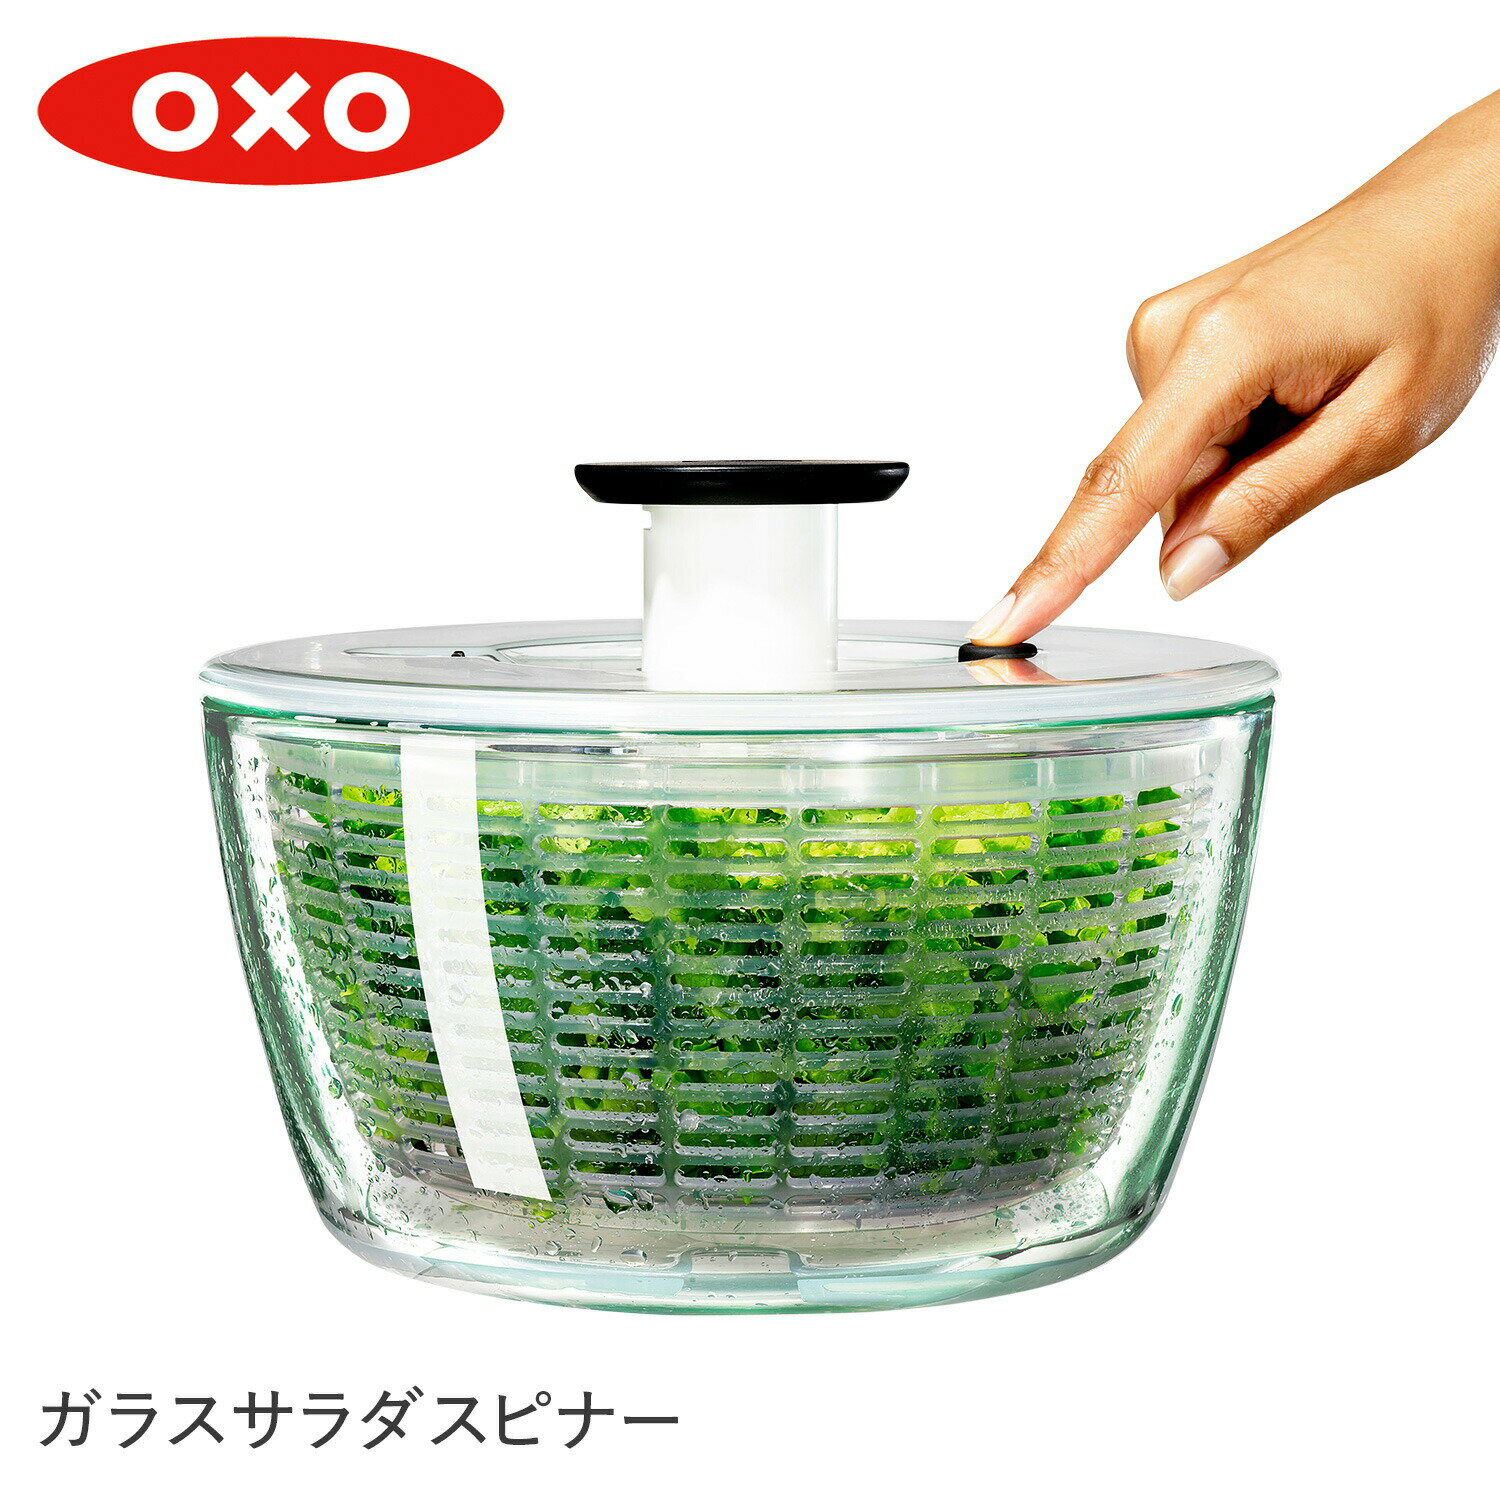 oxo GLASS SALAD SPINNER オクソー ガラスサラダスピナー 野菜水切り器 手動 回転式 11262700